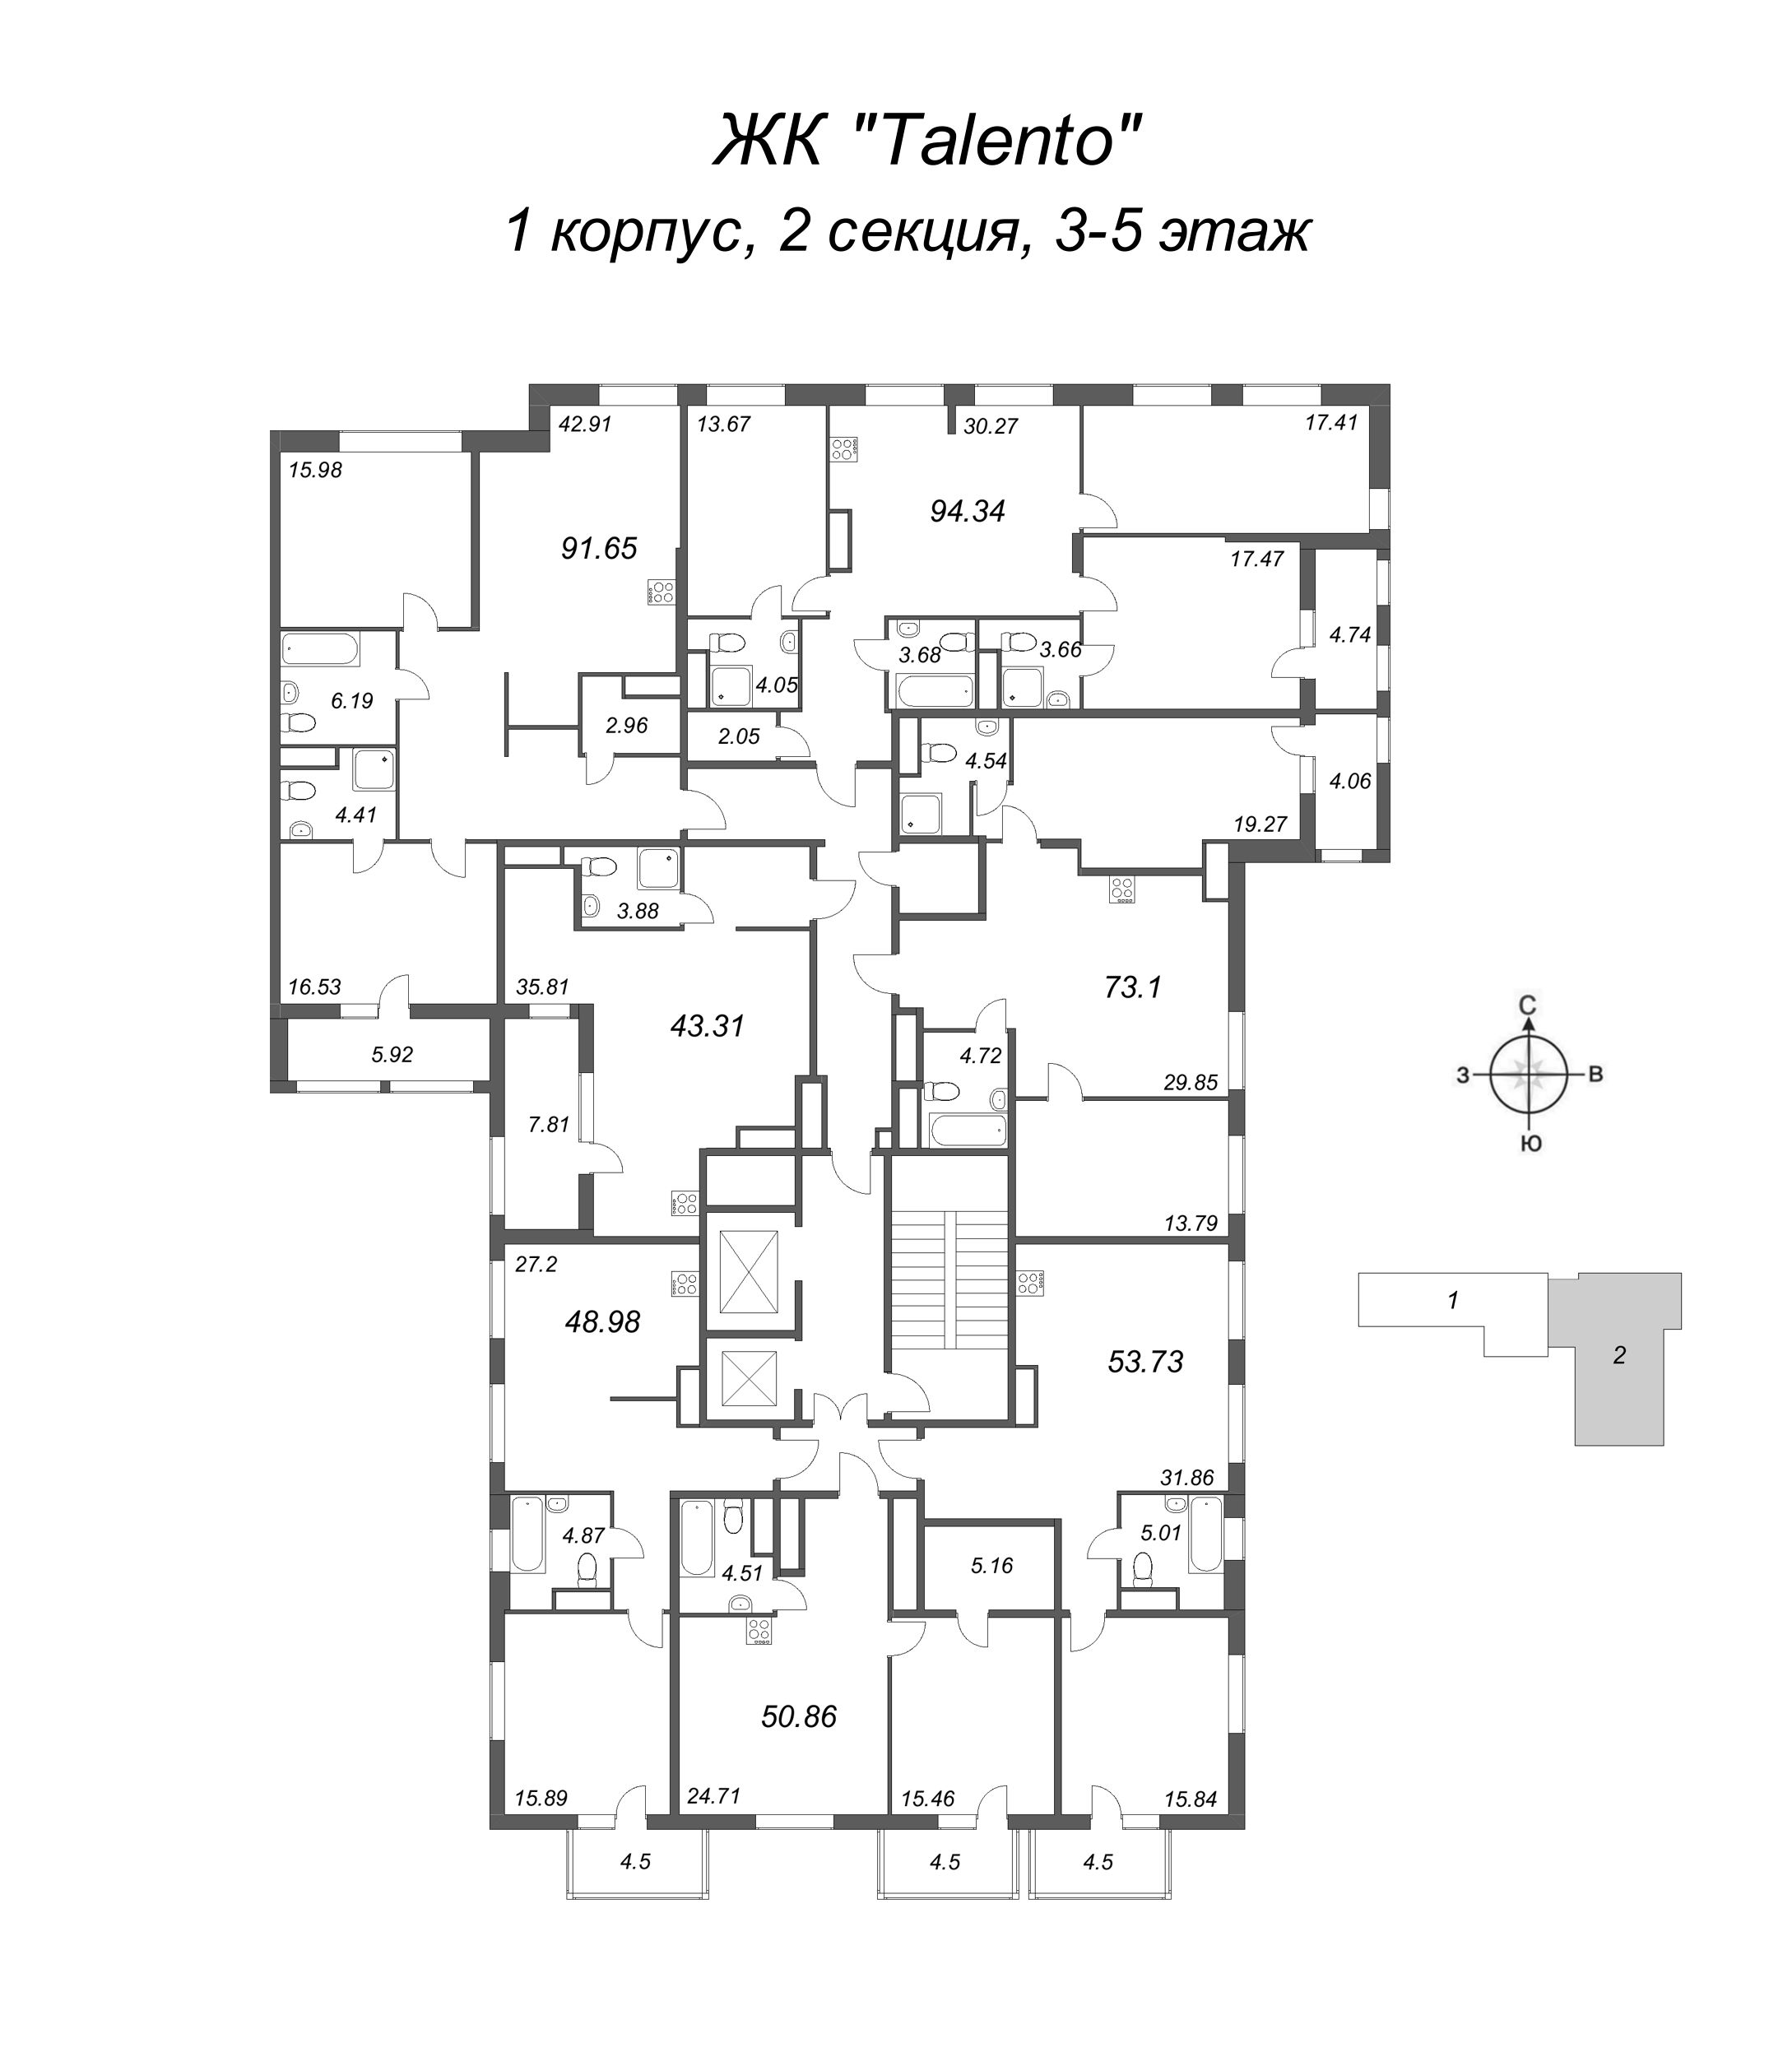 2-комнатная (Евро) квартира, 53.73 м² - планировка этажа